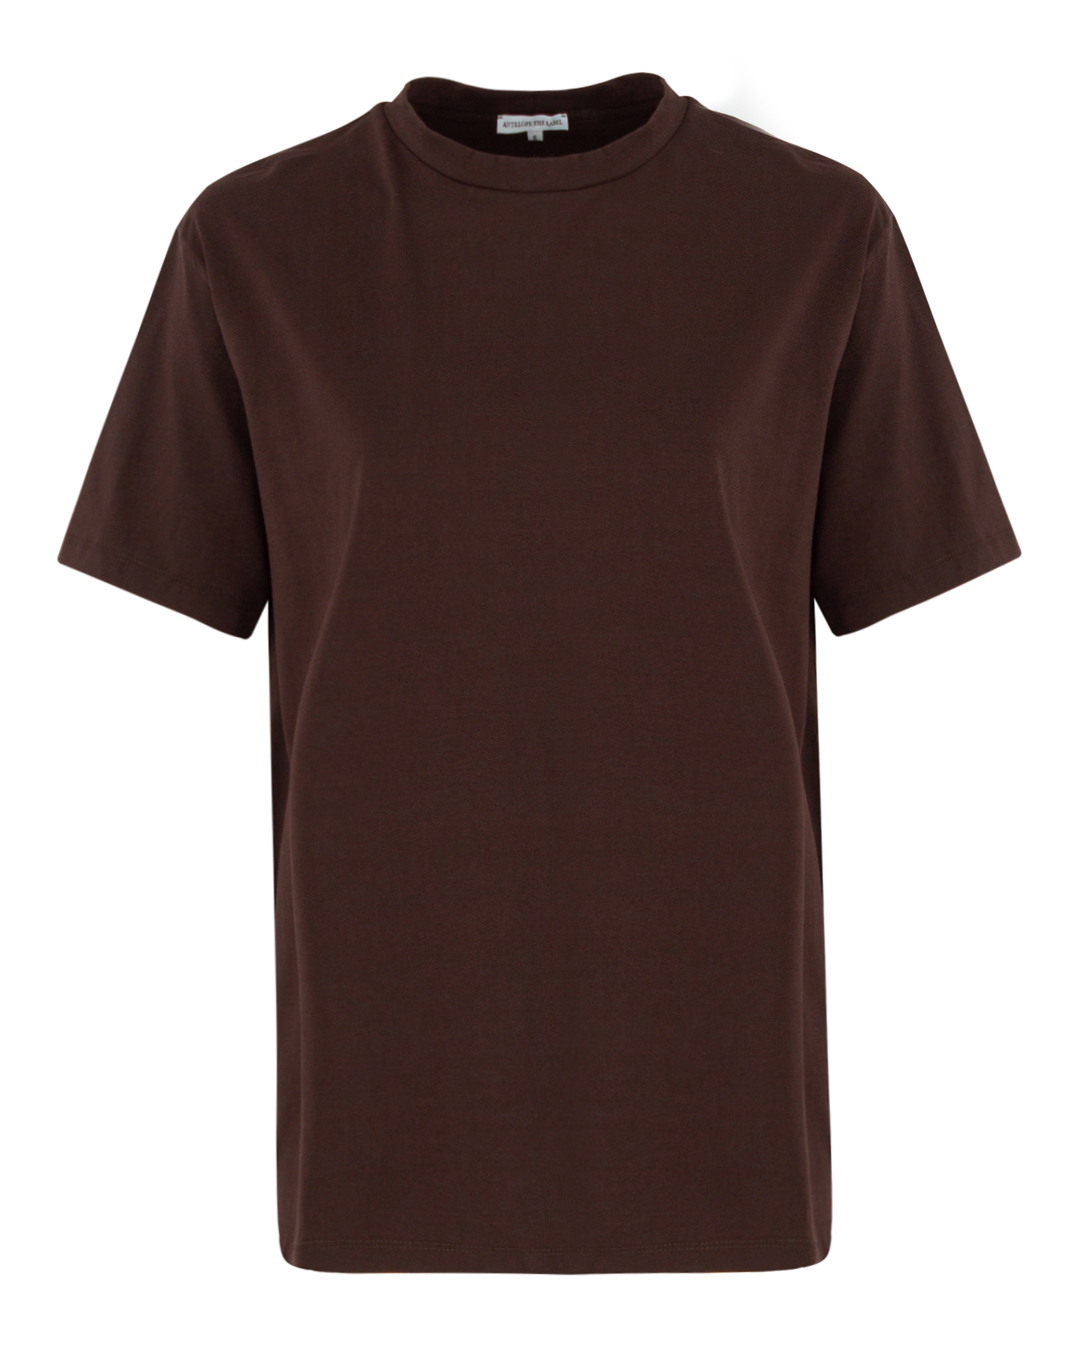 хлопковая футболка ANTELOPE THE LABEL T1.DARK BROWN тем.коричневый m, размер m